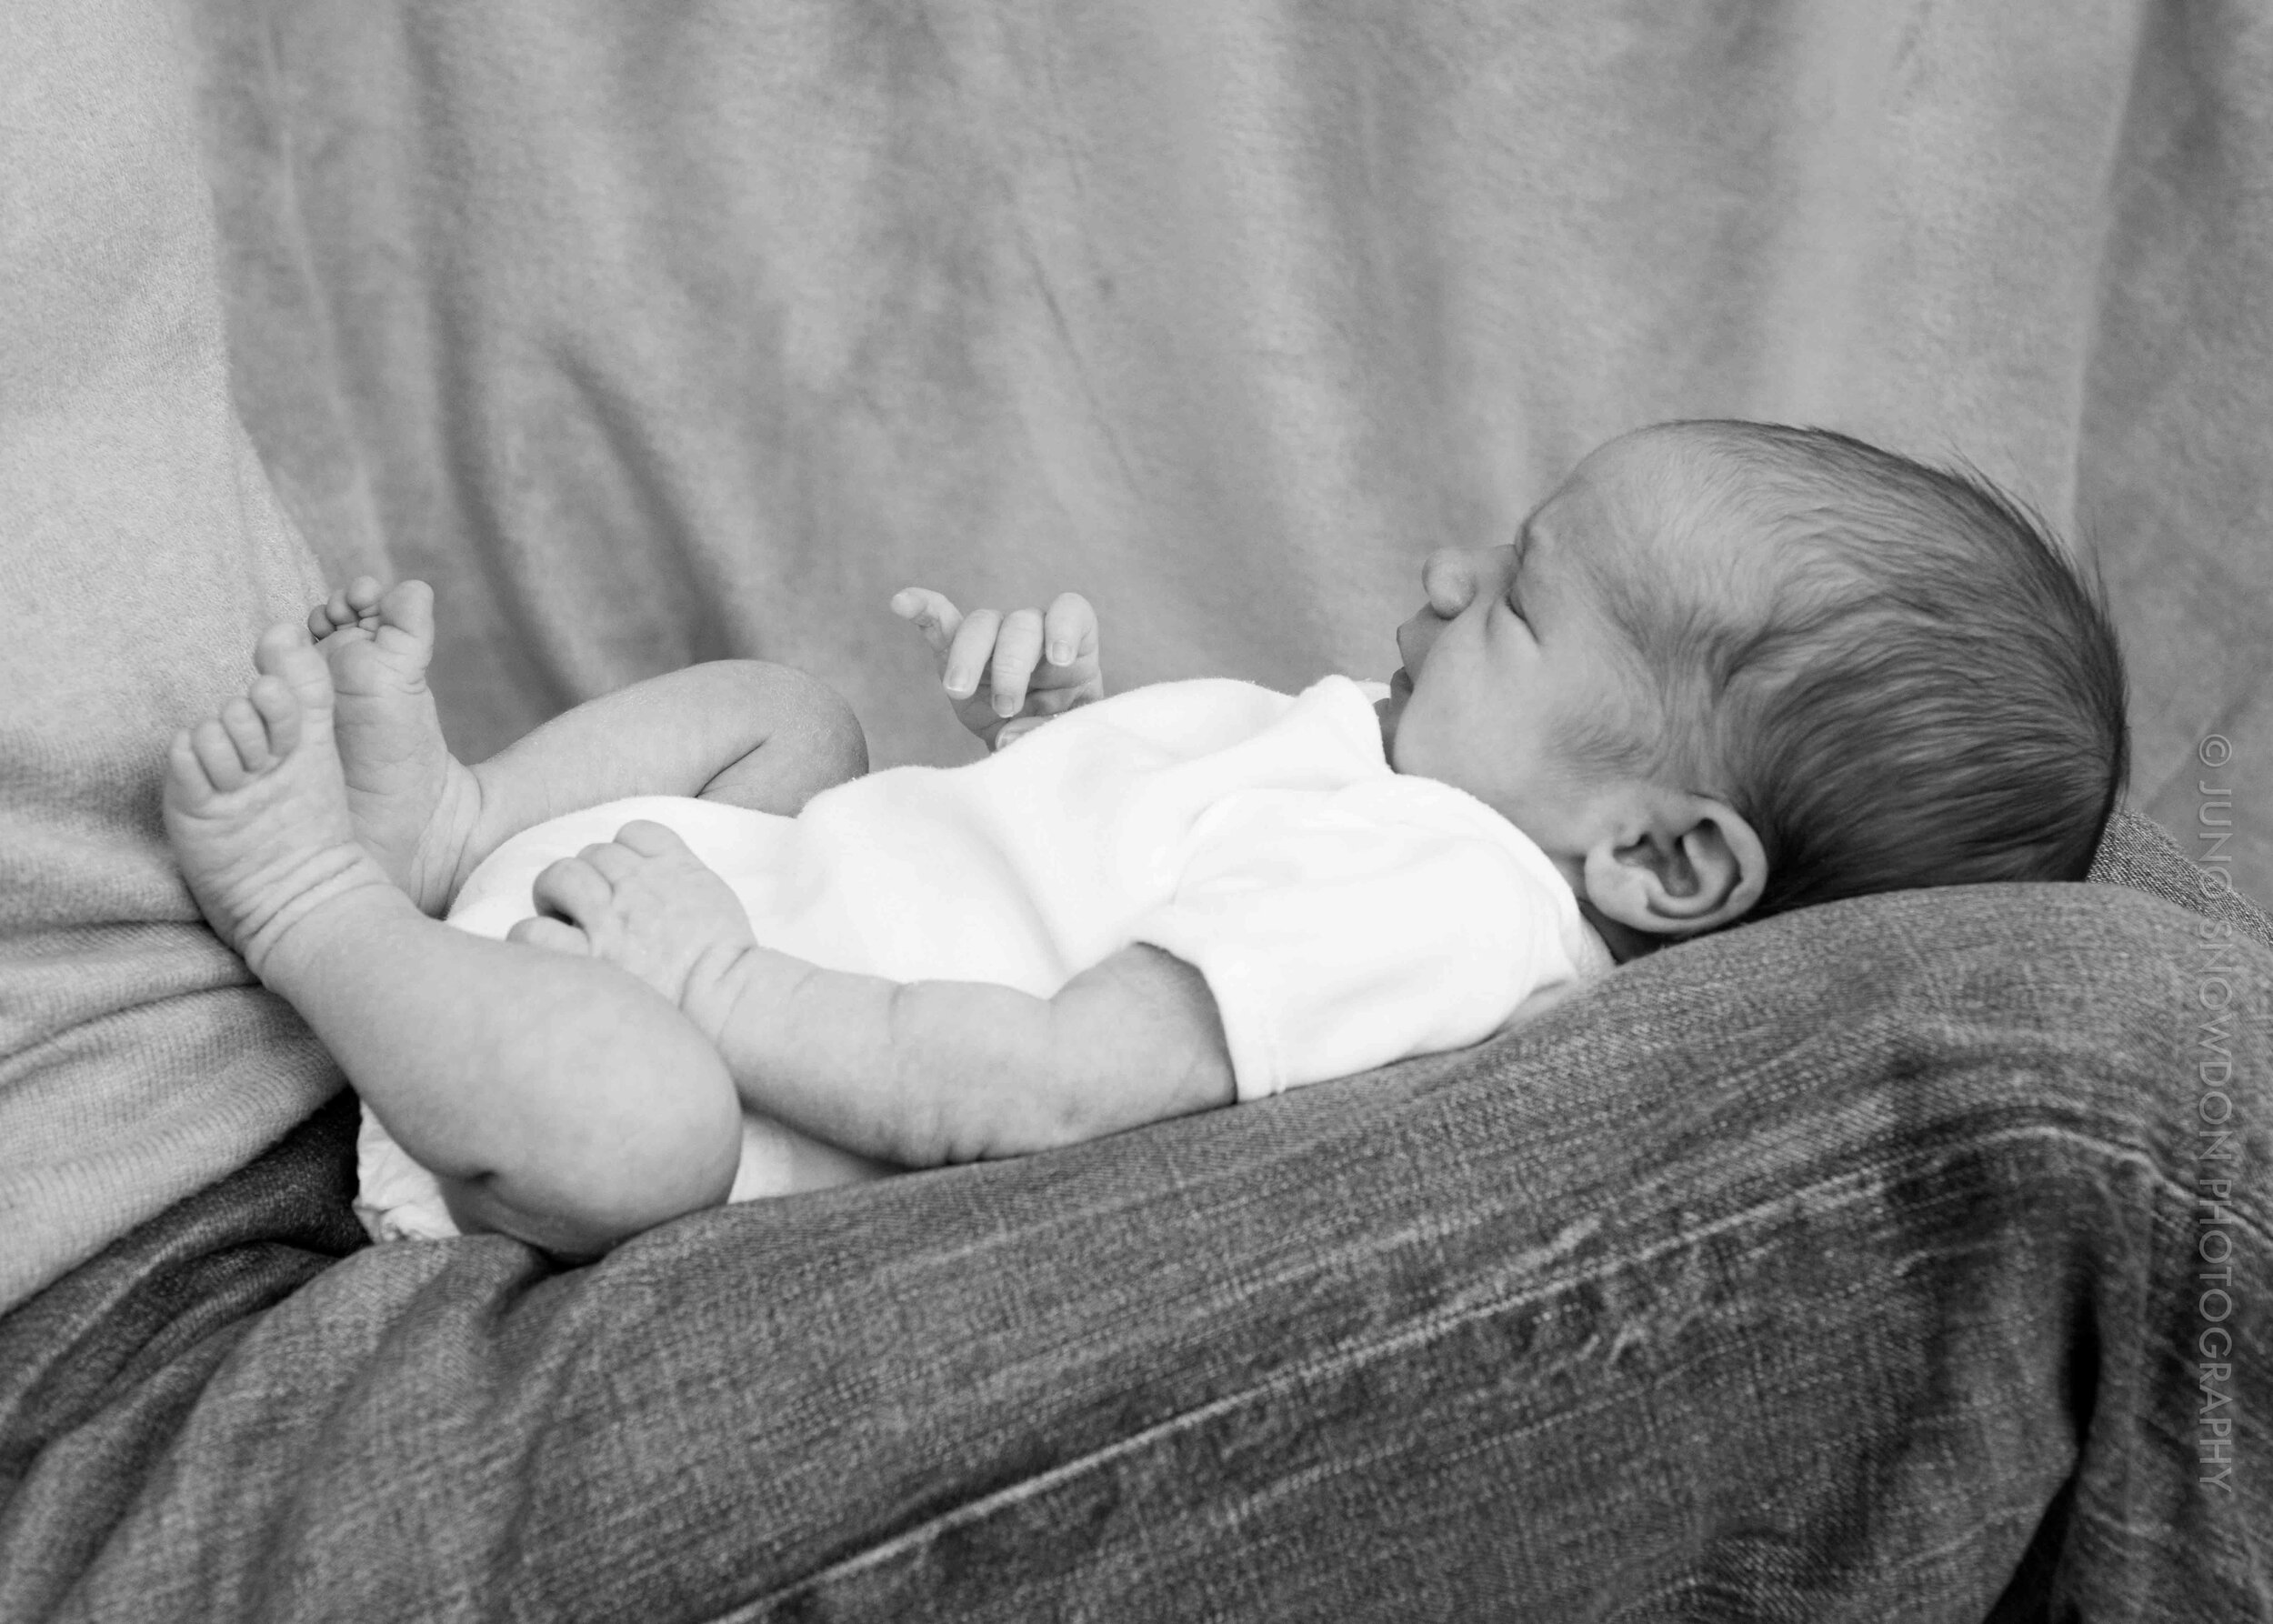 juno-snowdon-photography-newborn-family-portraits-london-3296.jpg